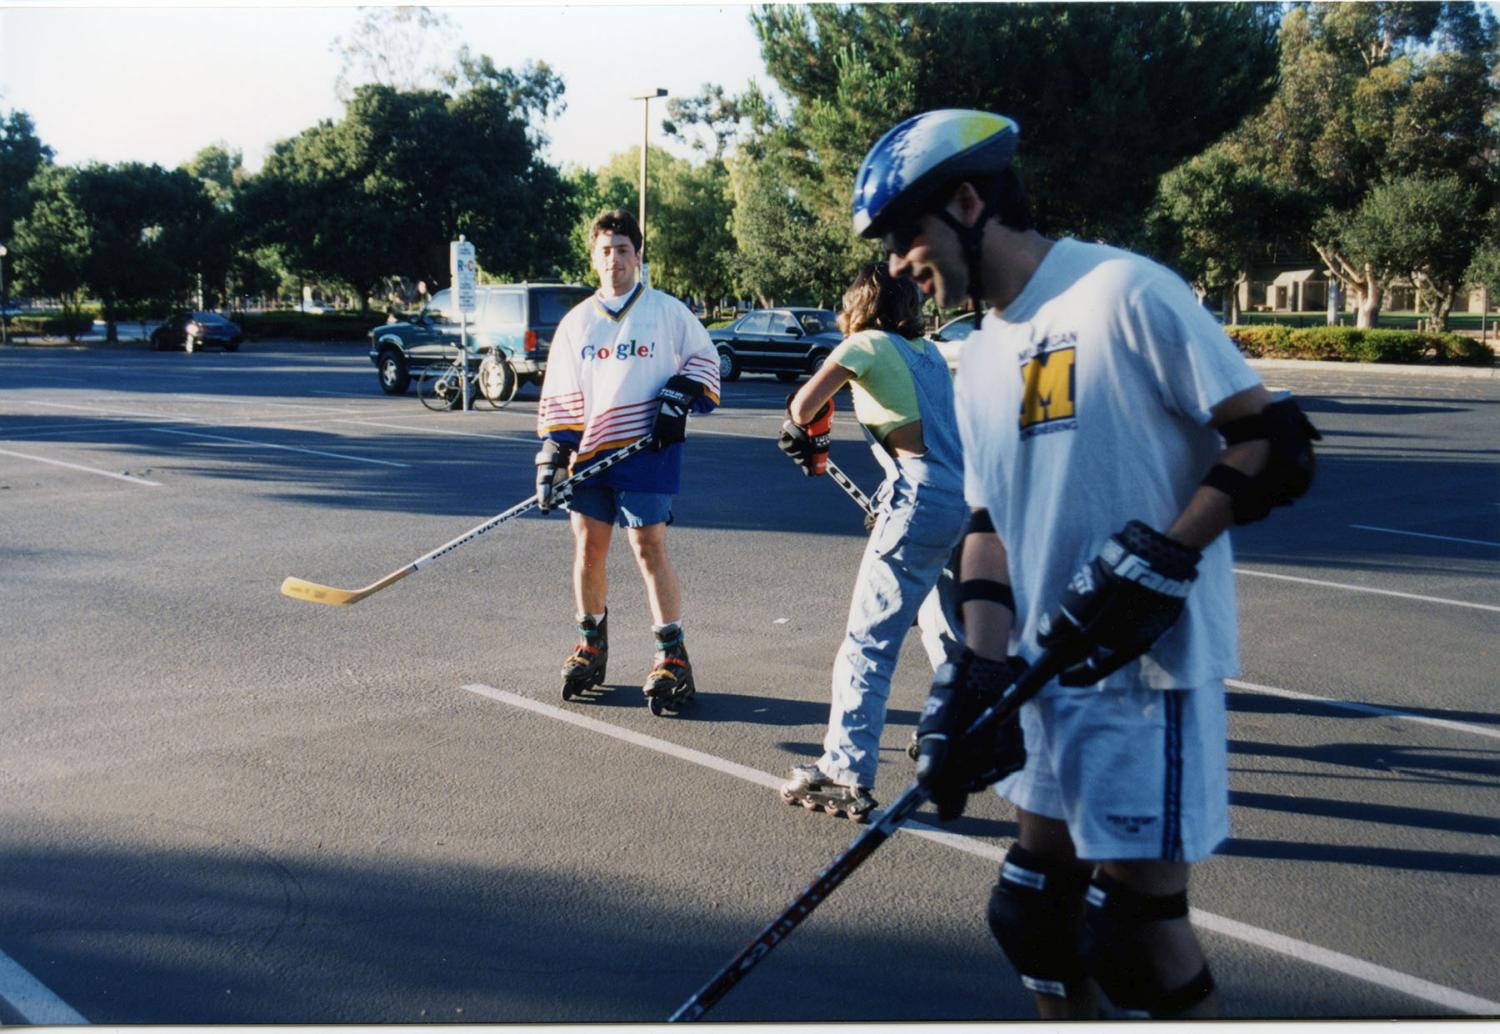 Sergey and Larry playing hockey